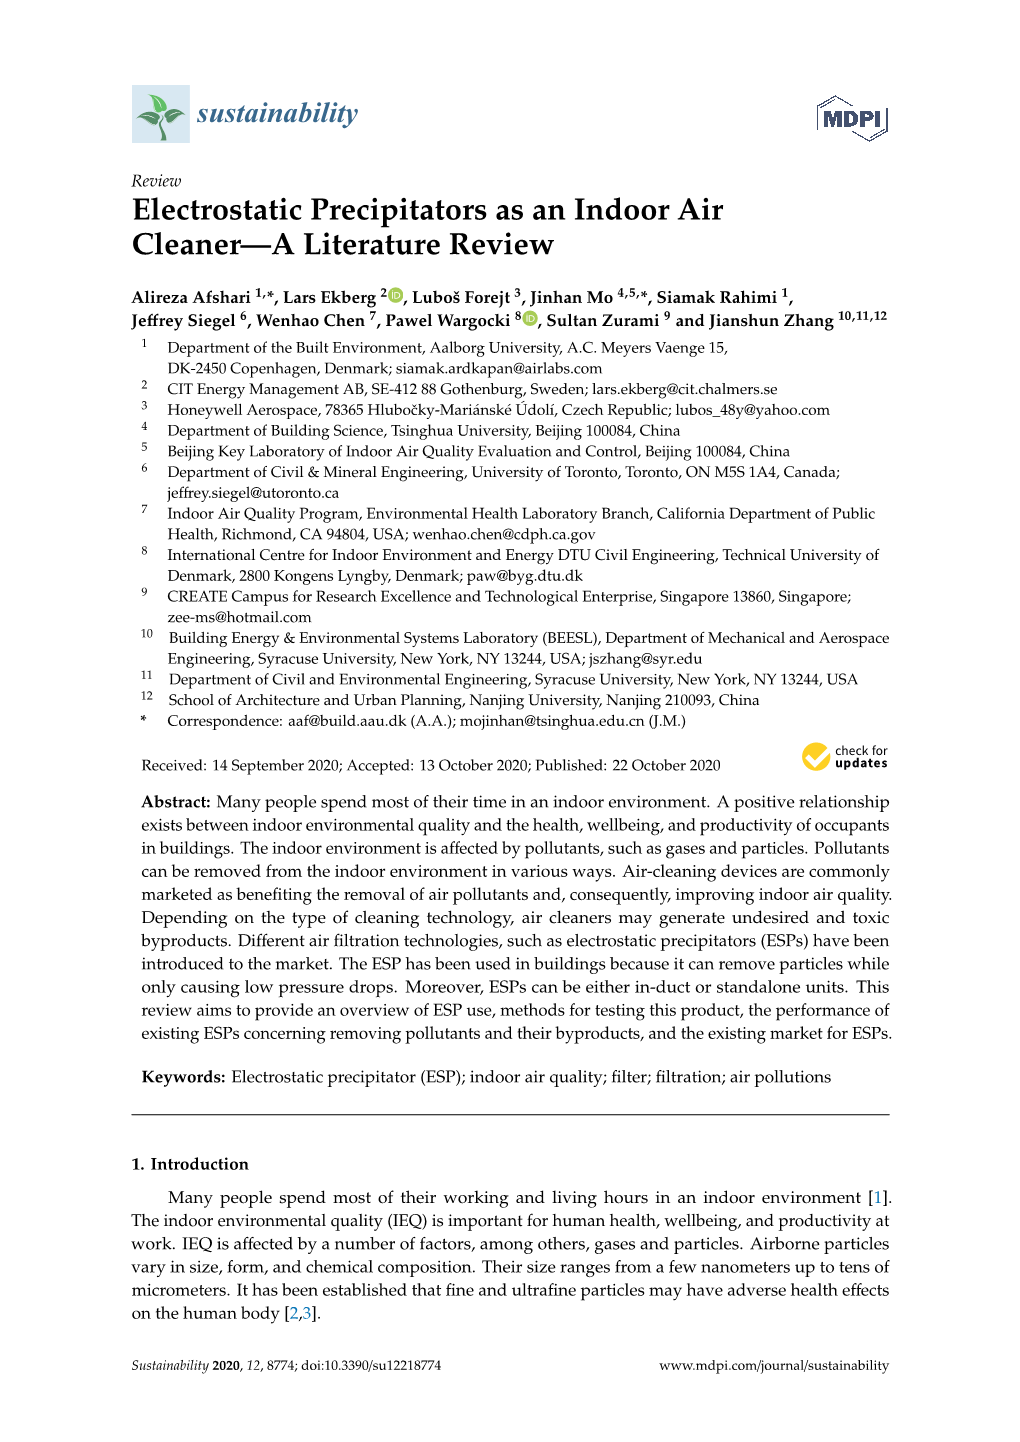 Electrostatic Precipitators As an Indoor Air Cleaner—A Literature Review